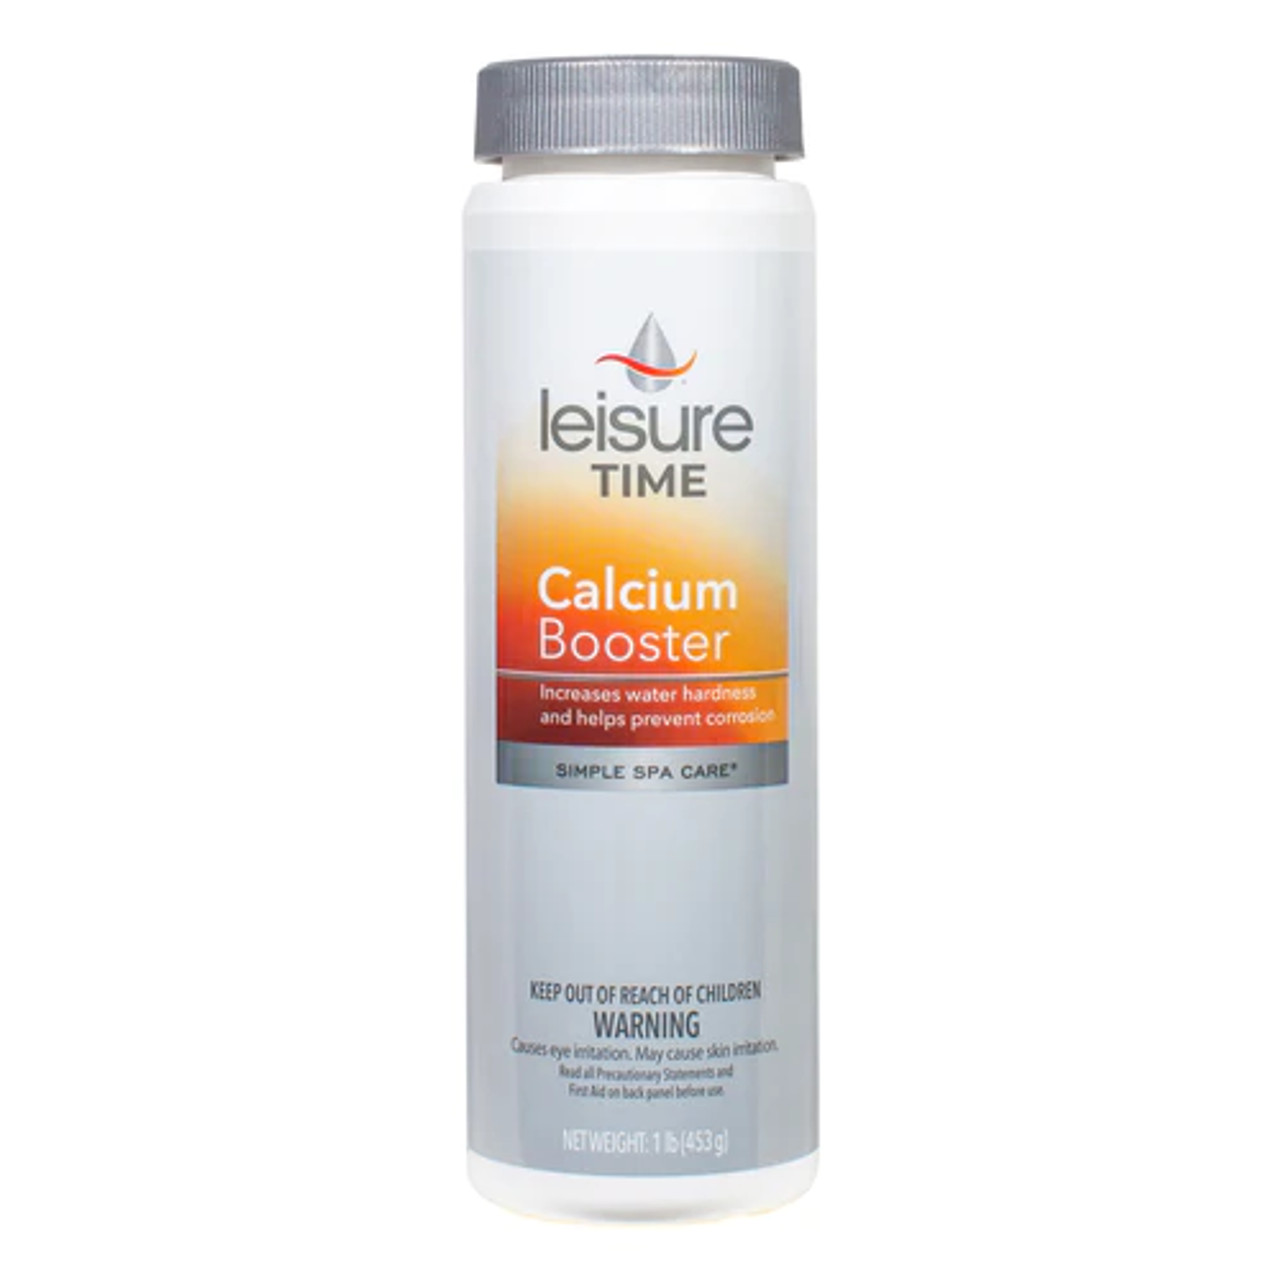 Leisure Time - Calcium Booster 1 lb